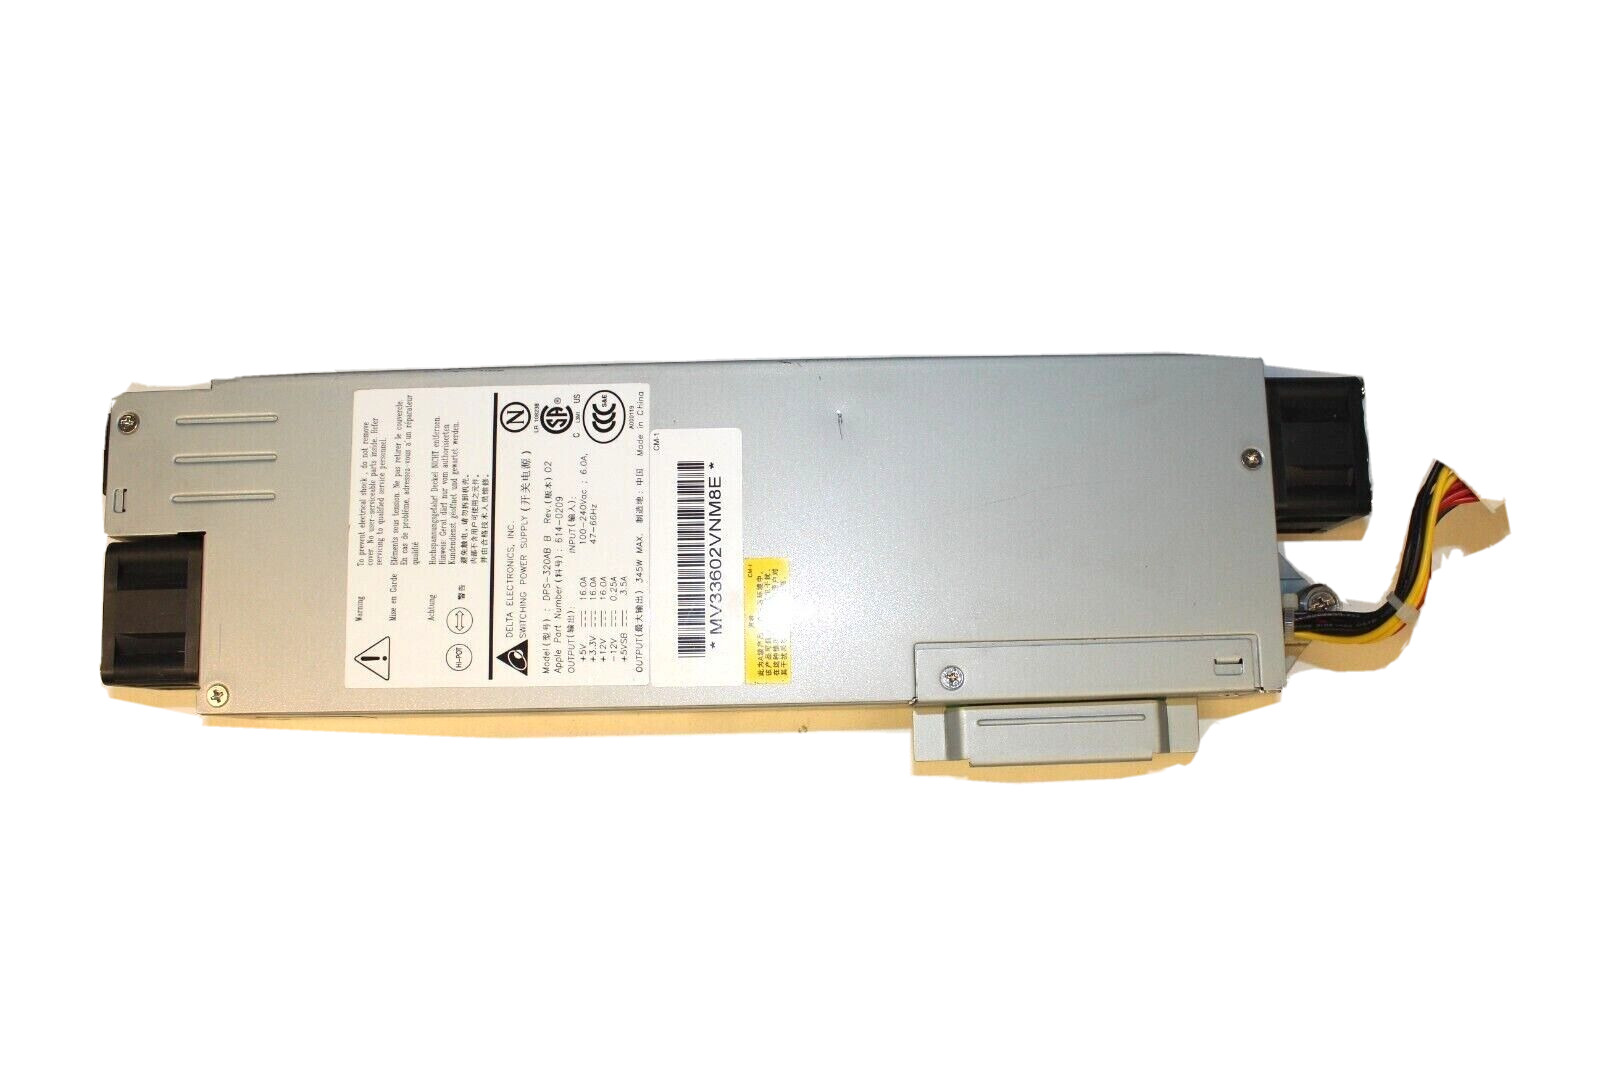 614-0209 Apple Xserve G4 Delta 345W Power Supply PSU Hot Swap